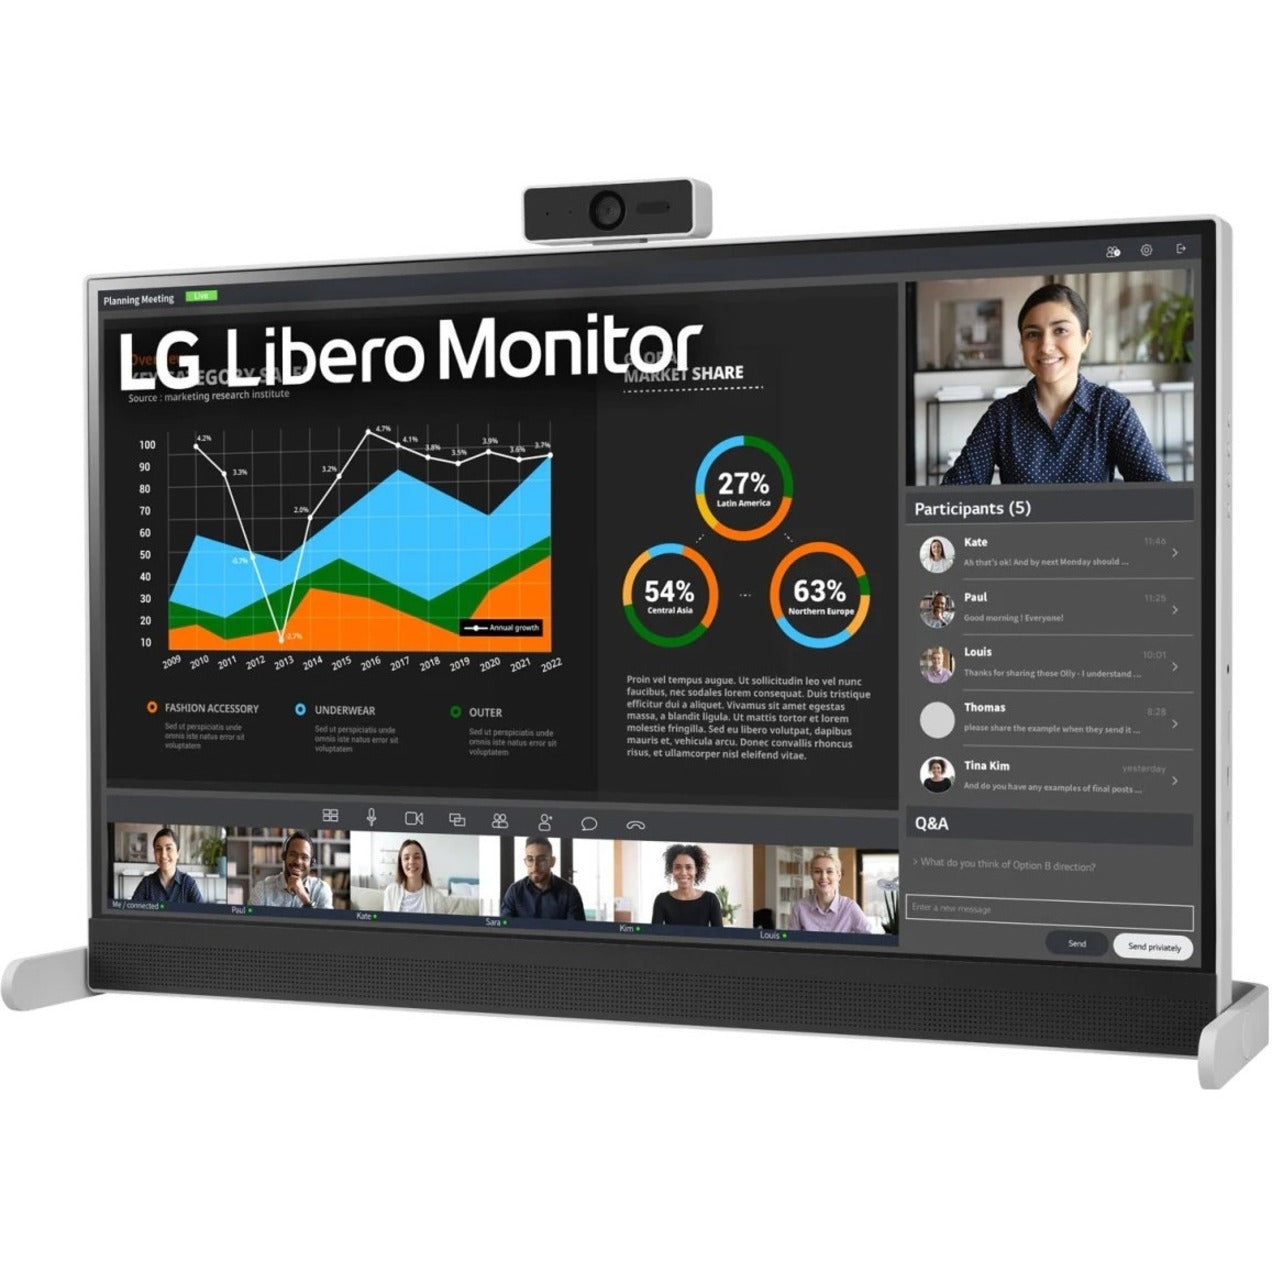 LG 27BQ70QC-S 27" QHD Libero Monitor with Detachable Full HD Webcam, Super Resolution+, HDR, Eye Care Technology